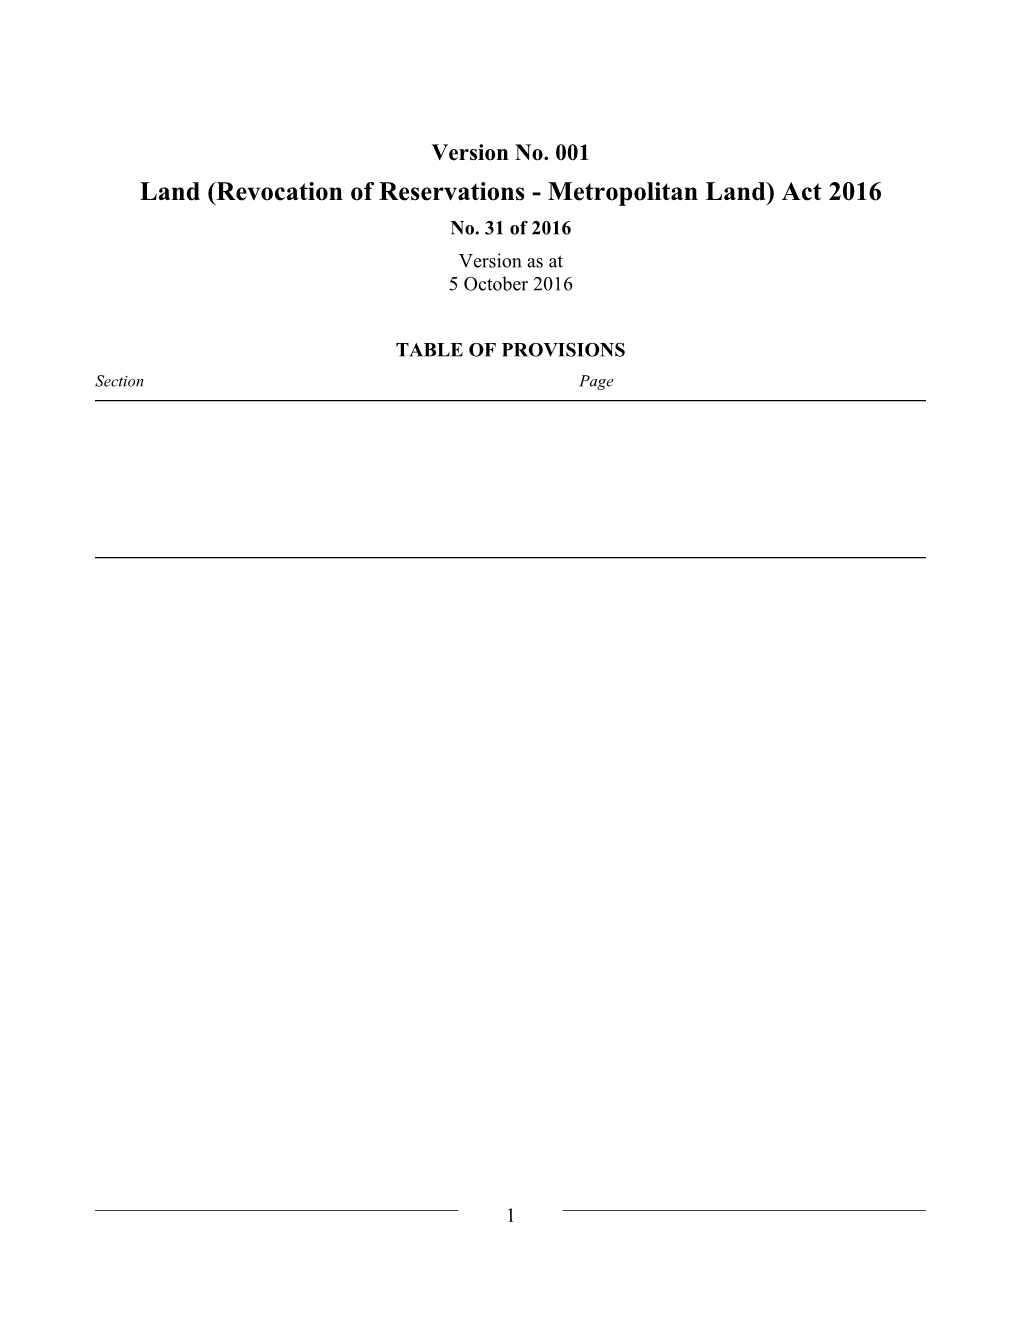 Land (Revocation of Reservations - Metropolitan Land) Act 2016